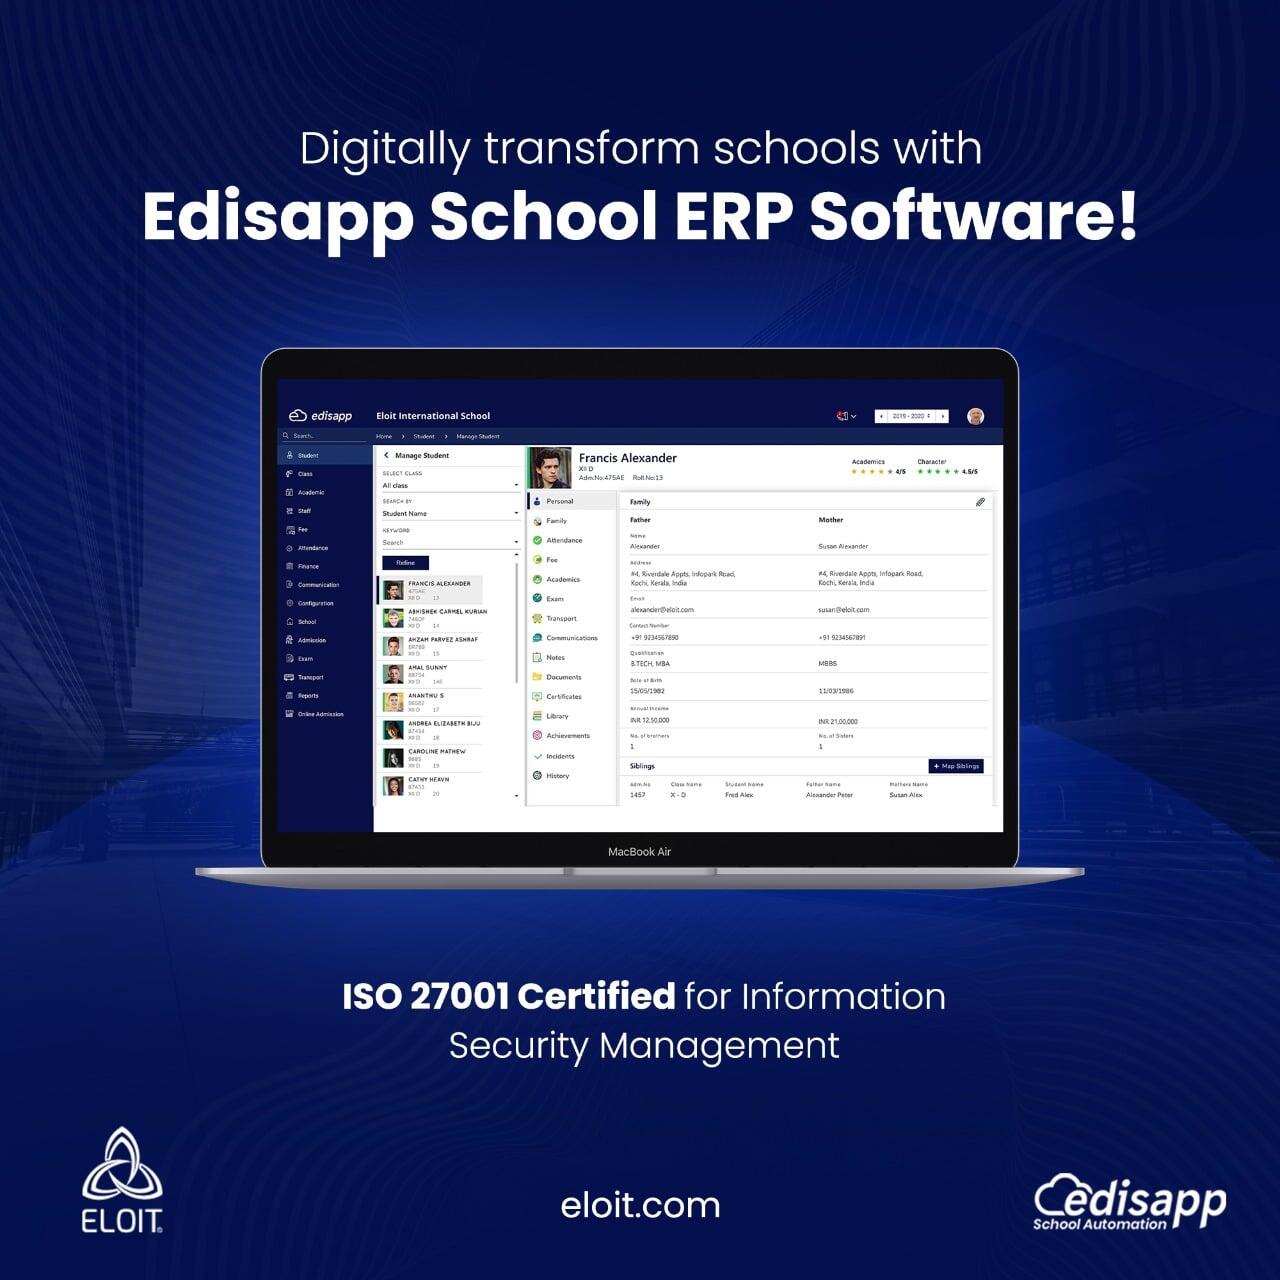 Edisapp – The ISO 27001 Certified School ERP Software